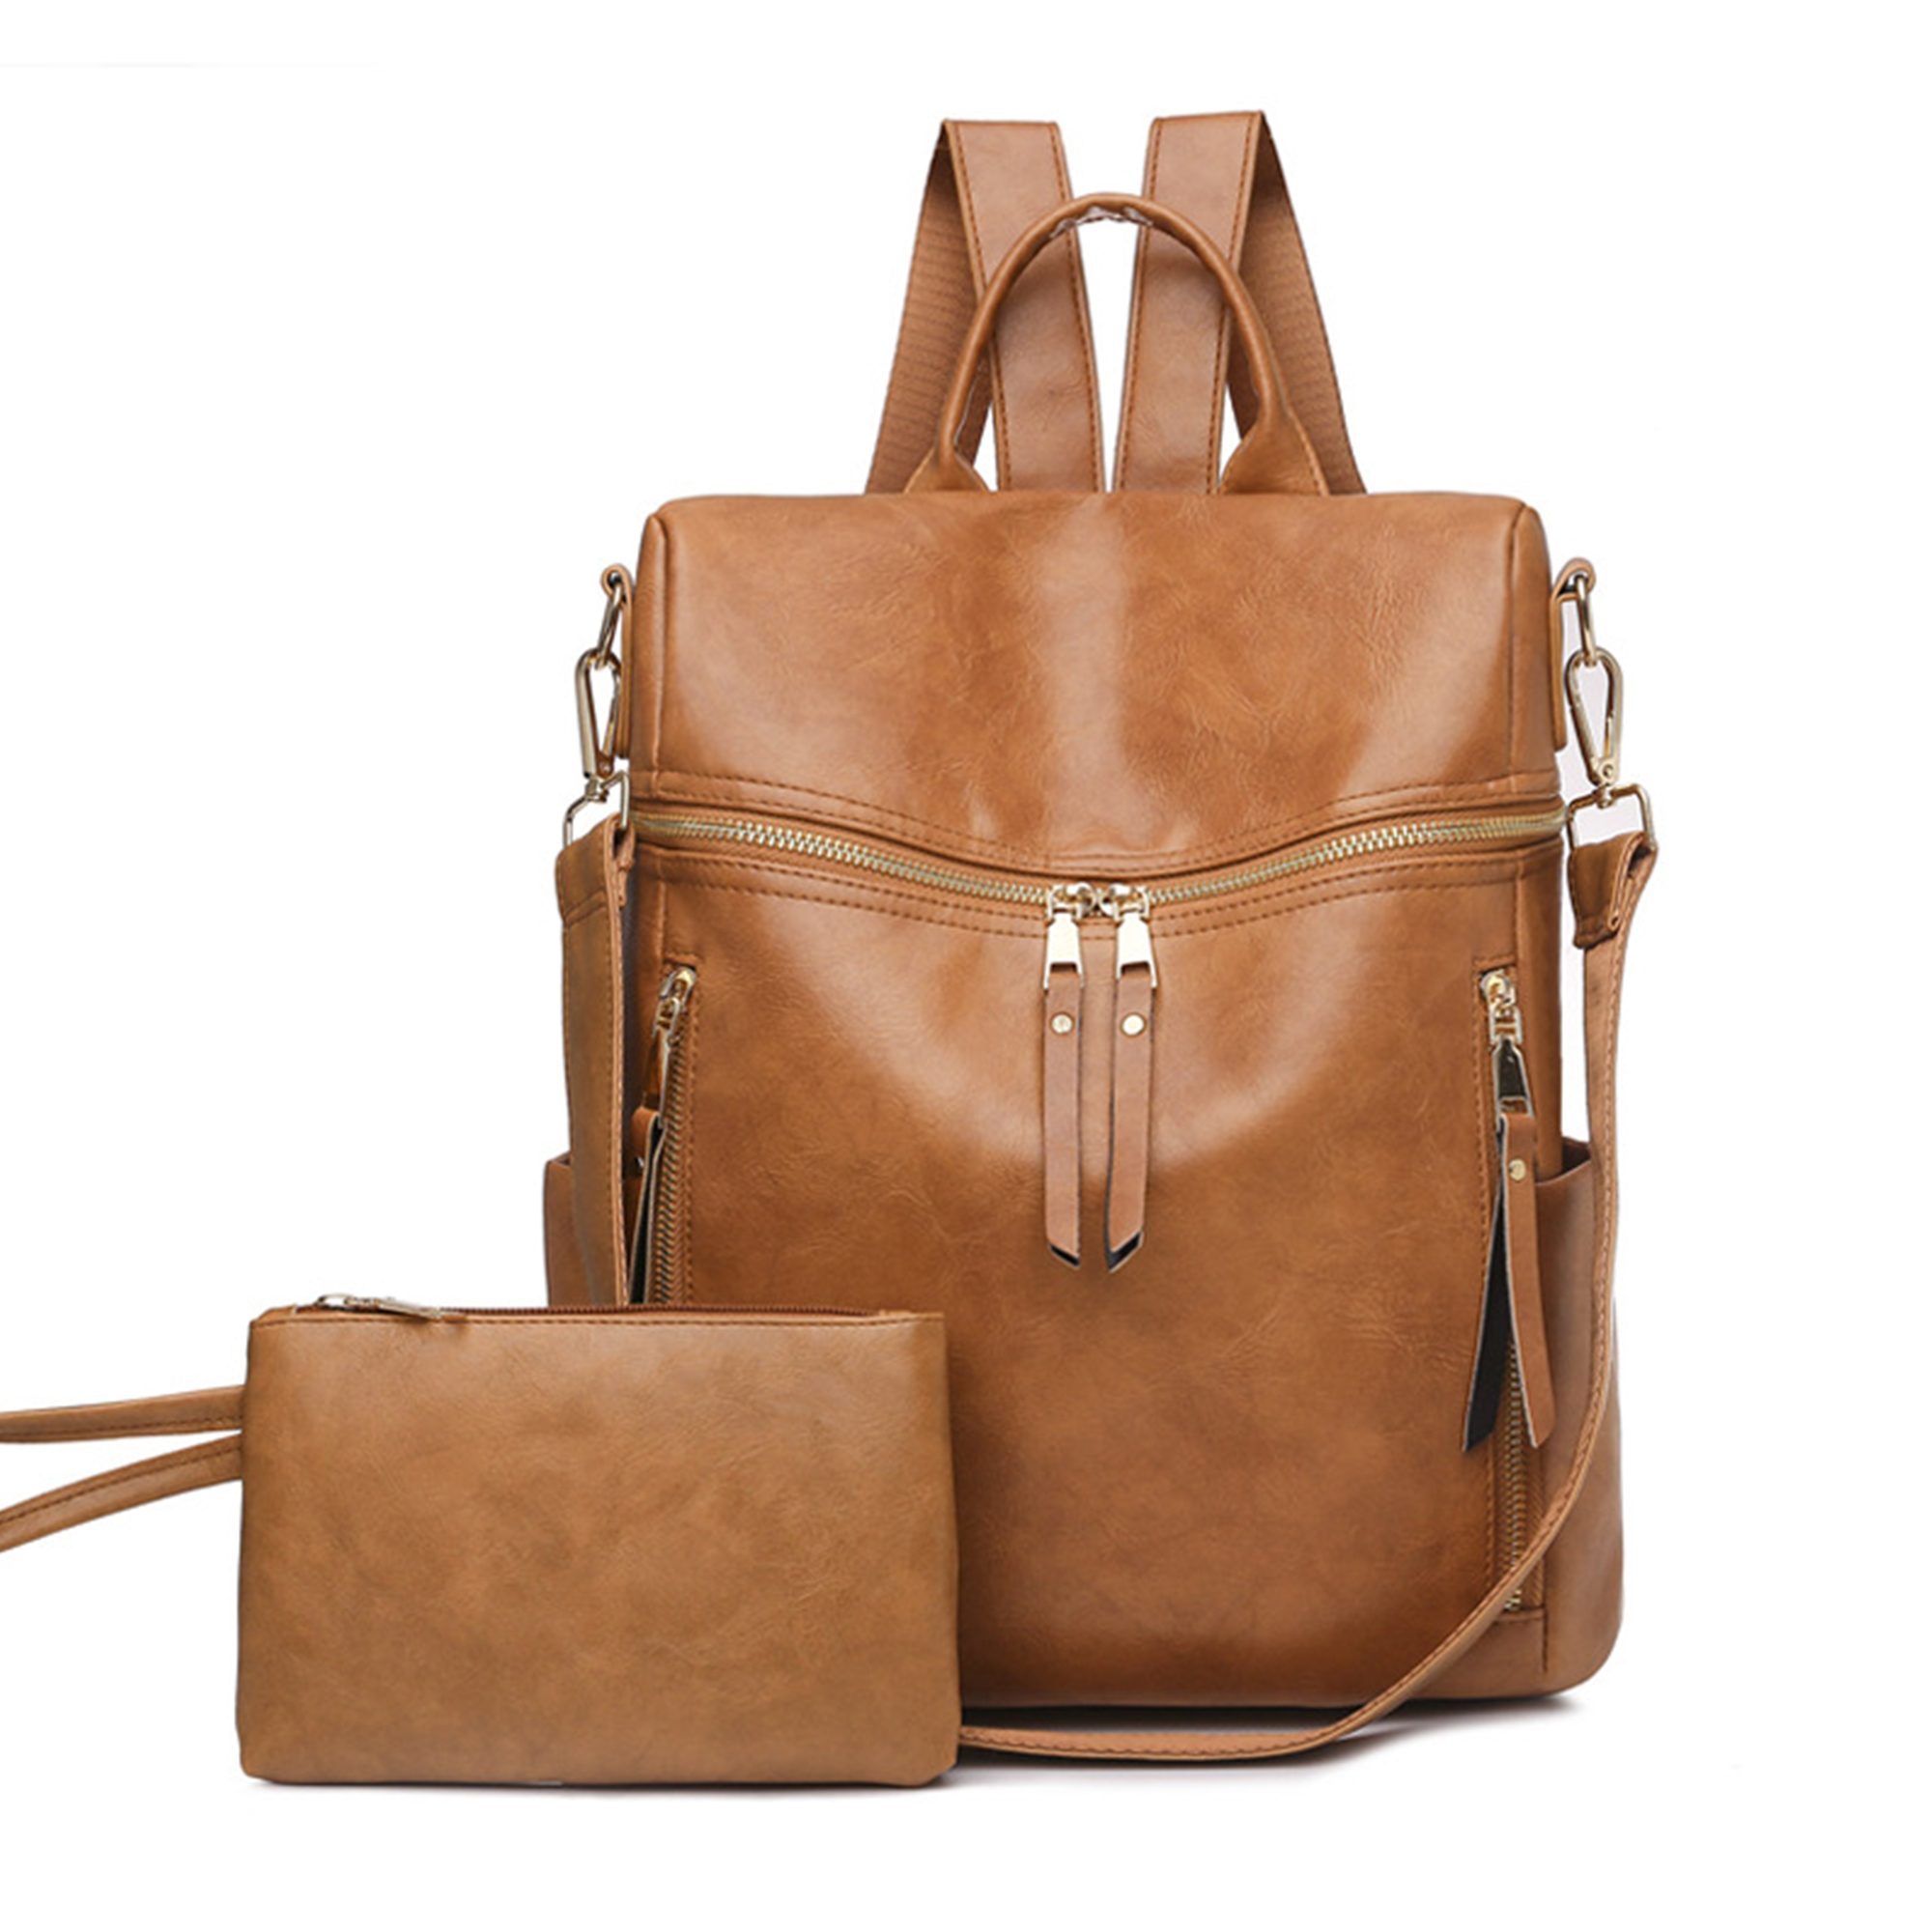 MKP Woman Leather Backpacks Handbags Anti-theft Travel School Books Bag ...